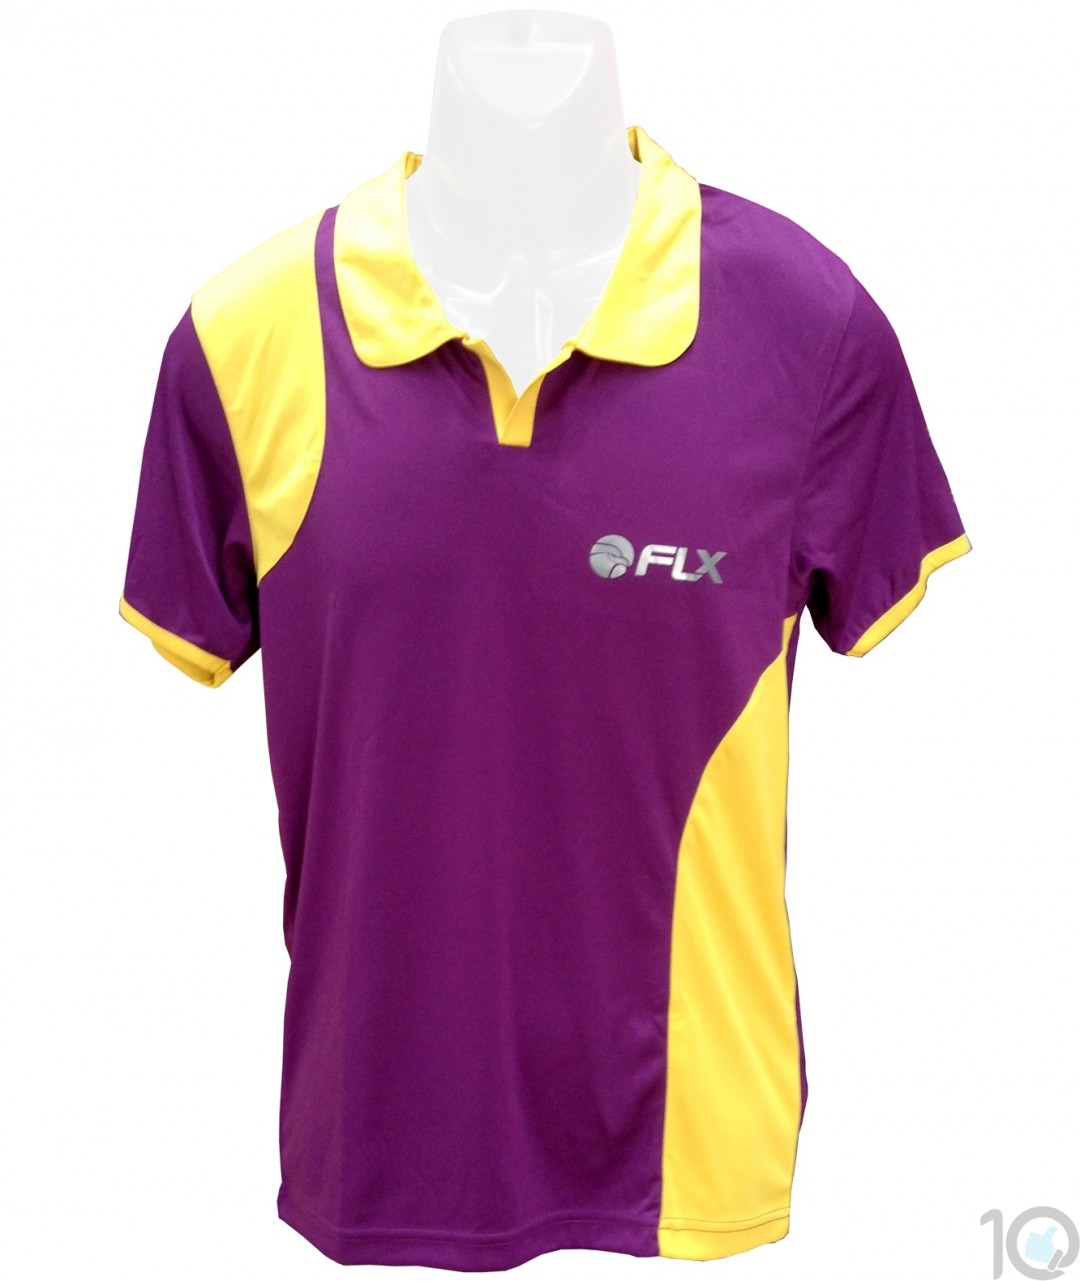 cricket jersey online